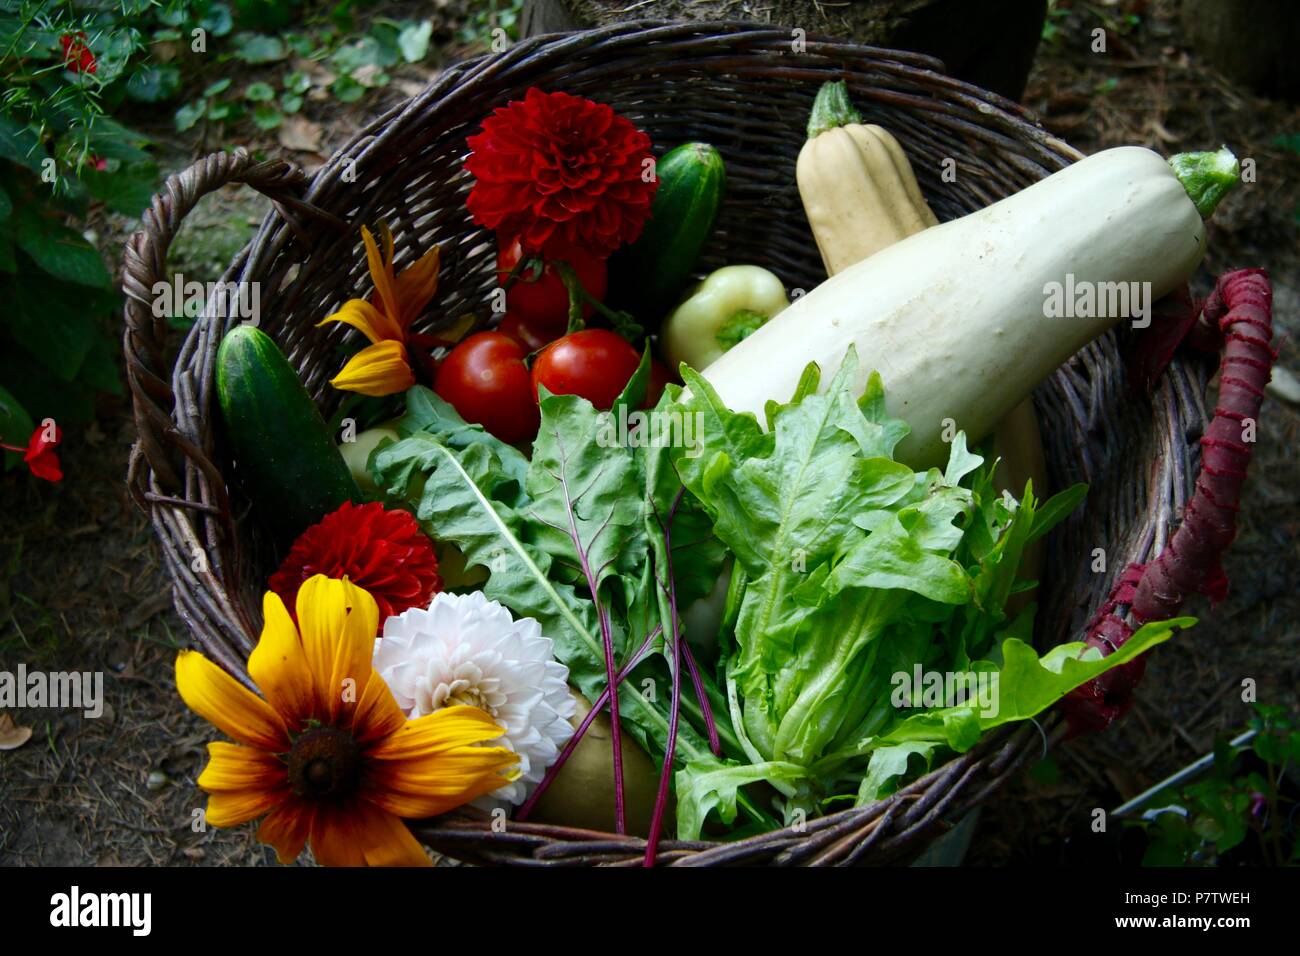 Fresh organic produce from a backyard vegetable garden Stock Photo